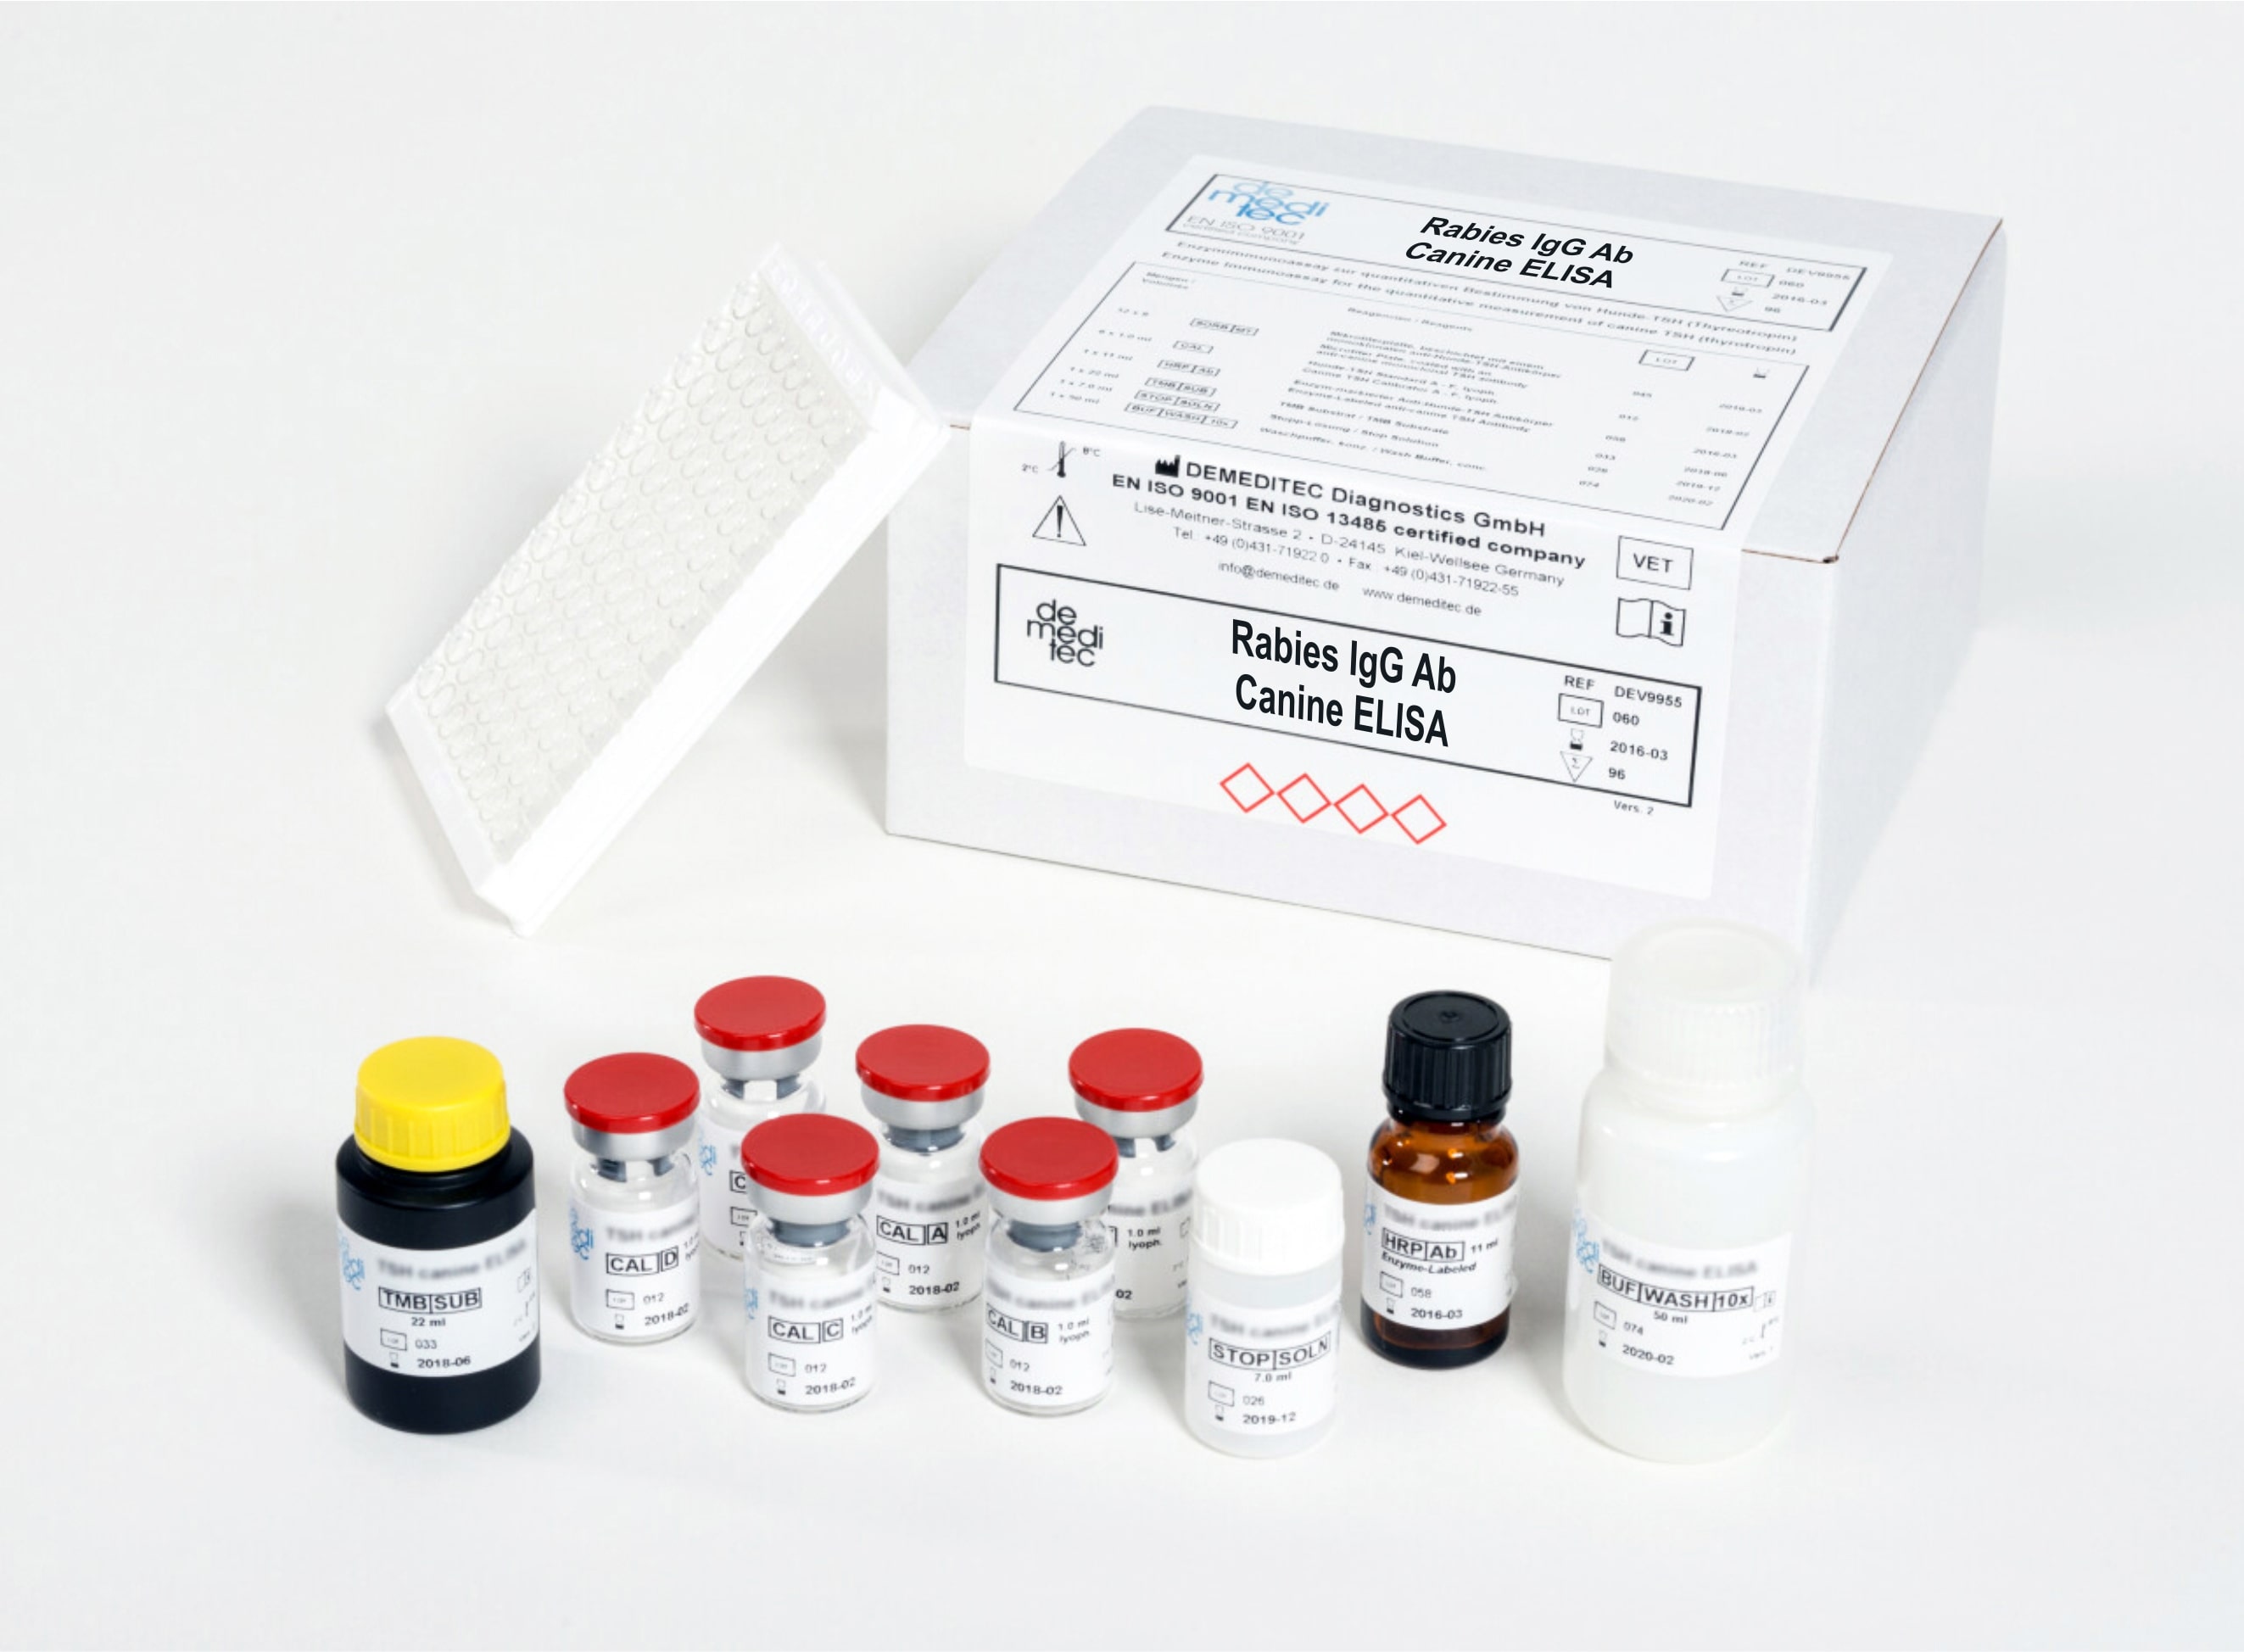 Rabies Virus IgG Ab (Dog) ELISA Test Kit